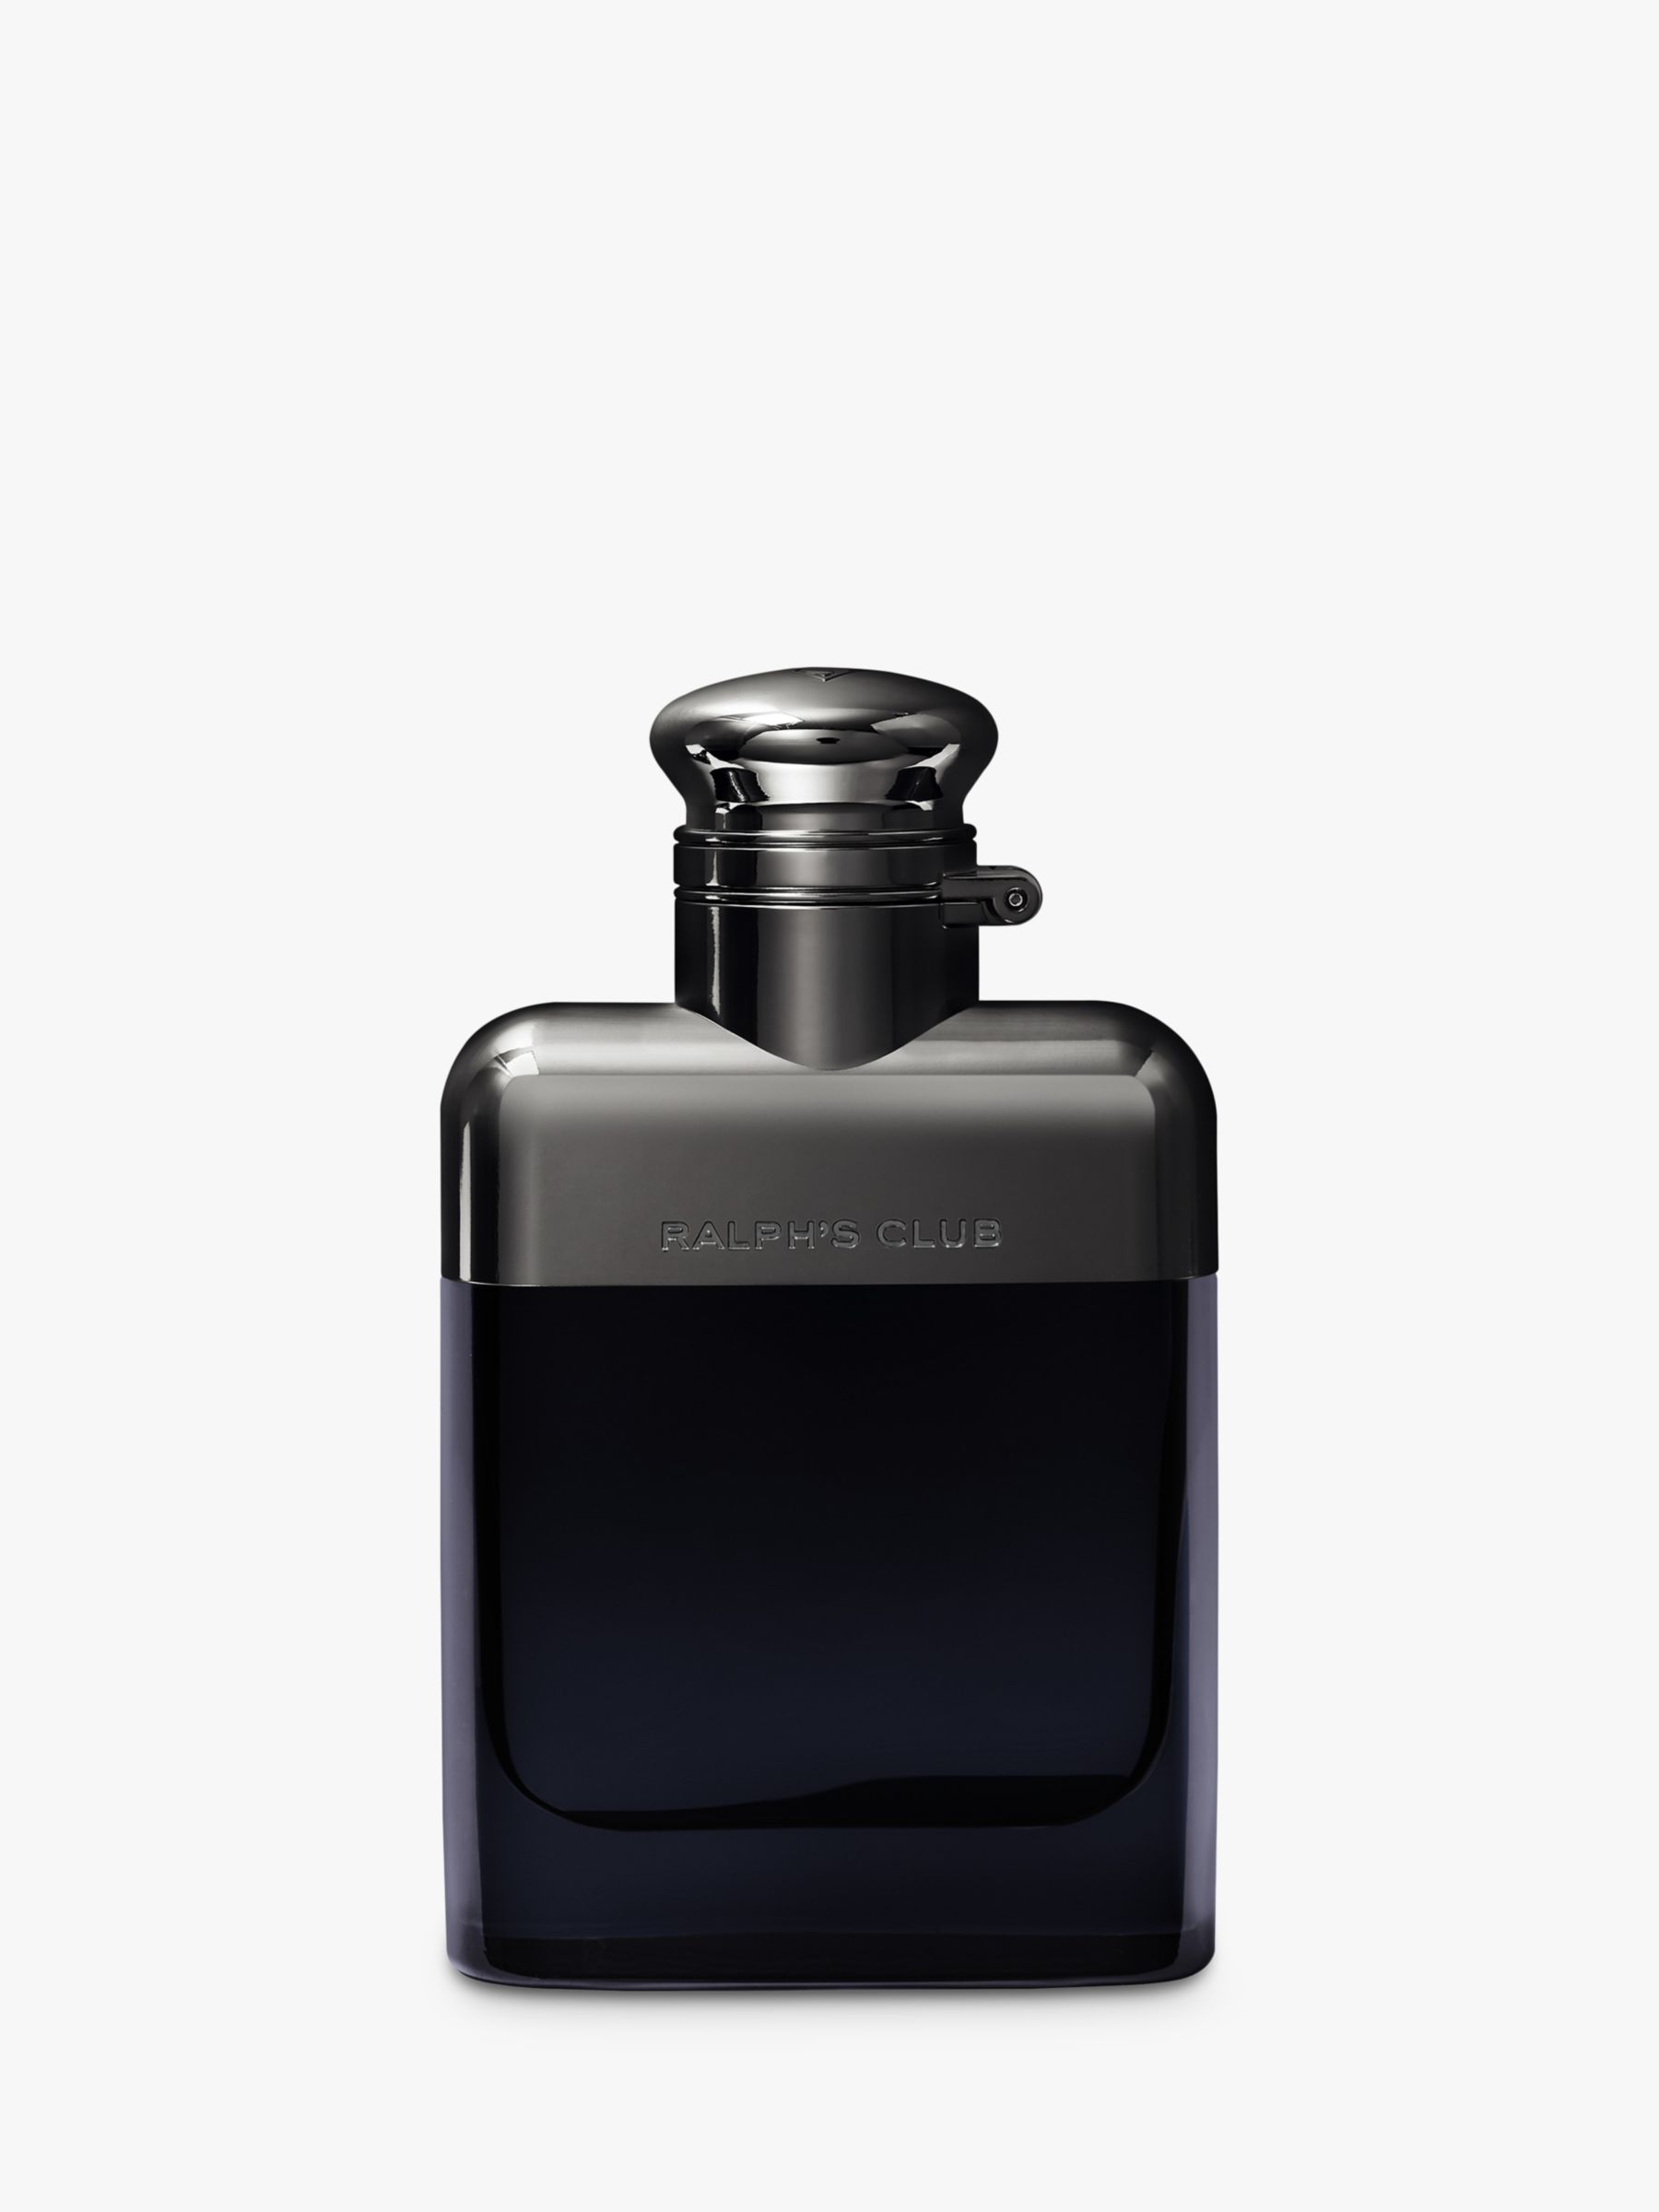 Ralph Lauren Ralph's Club Eau de Parfum, 50ml at John Lewis & Partners